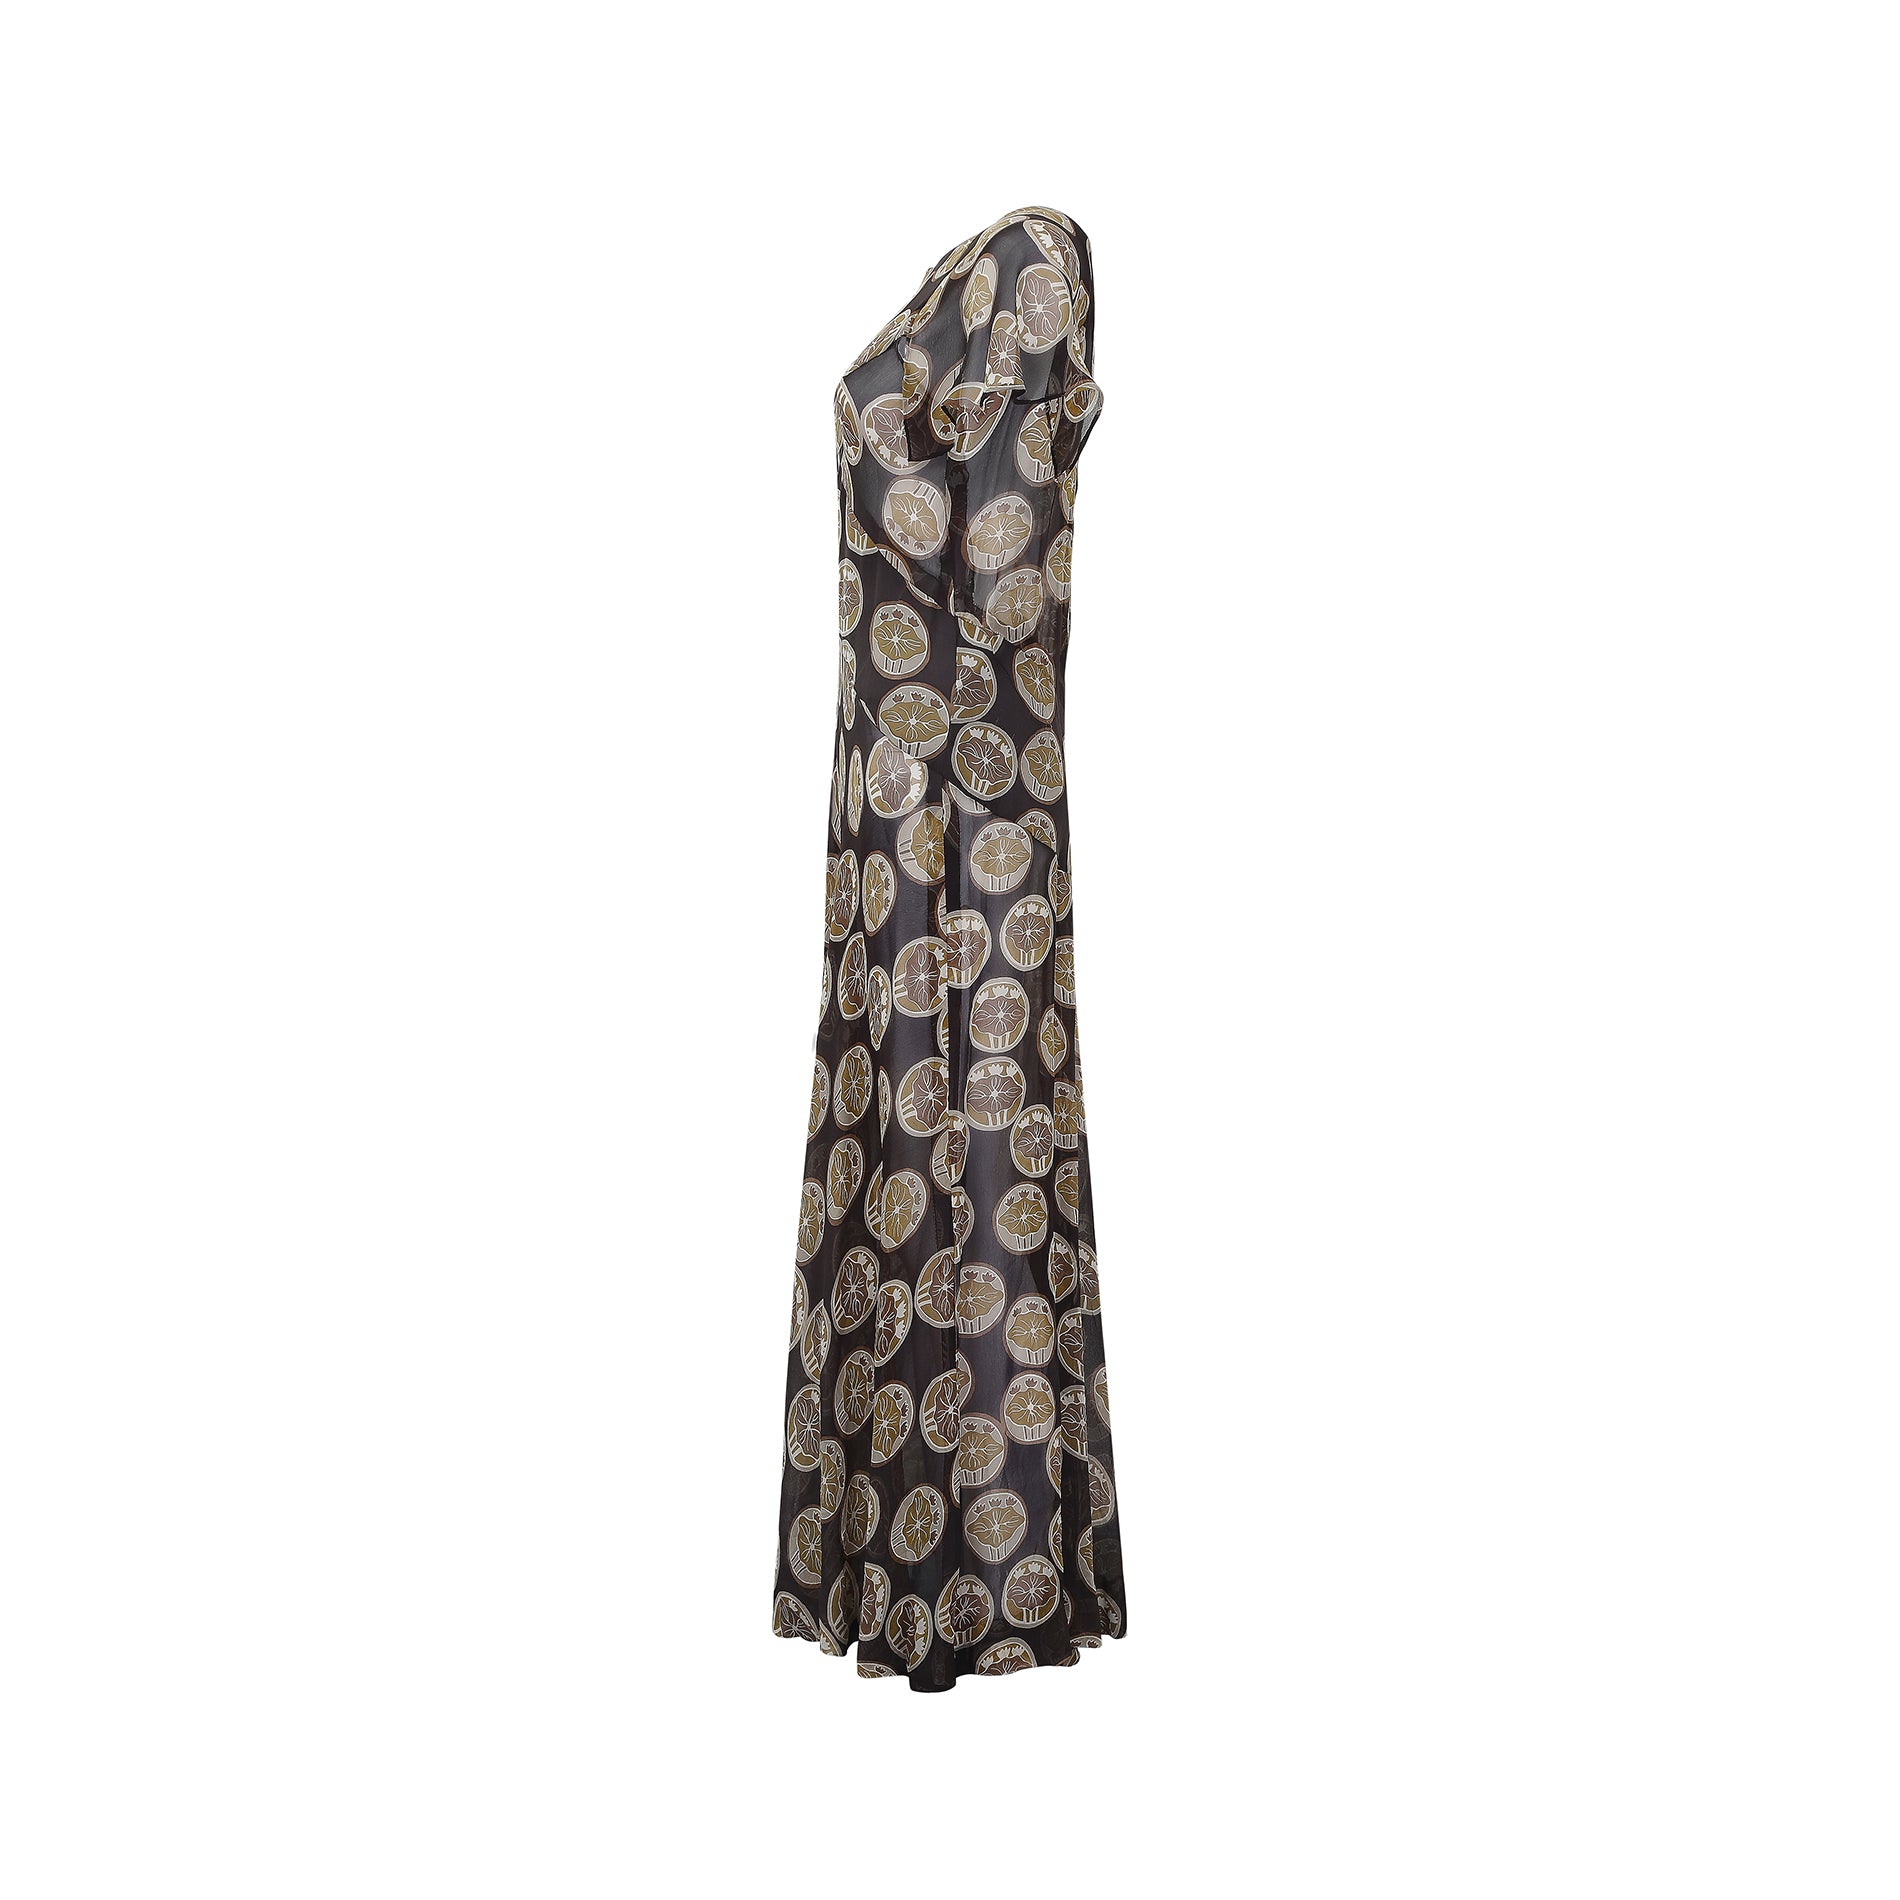 ARCHIVE - 1930s Silk Chiffon Brown Novelty Print Dress